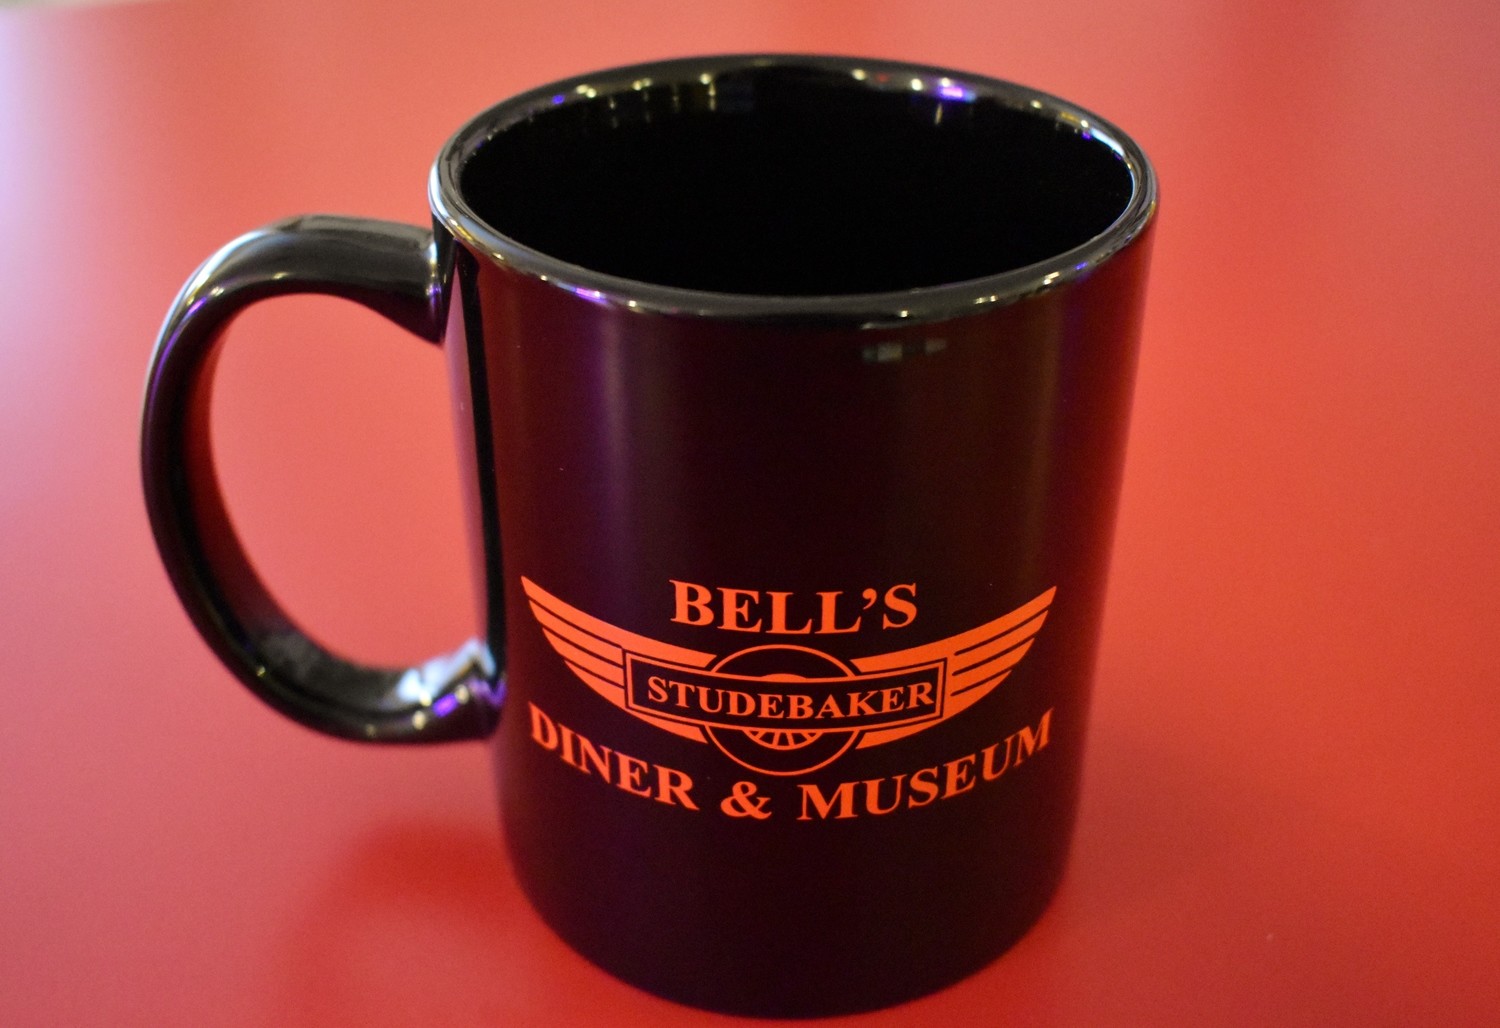 Bell's Studebaker Diner & Museum Coffee Mug